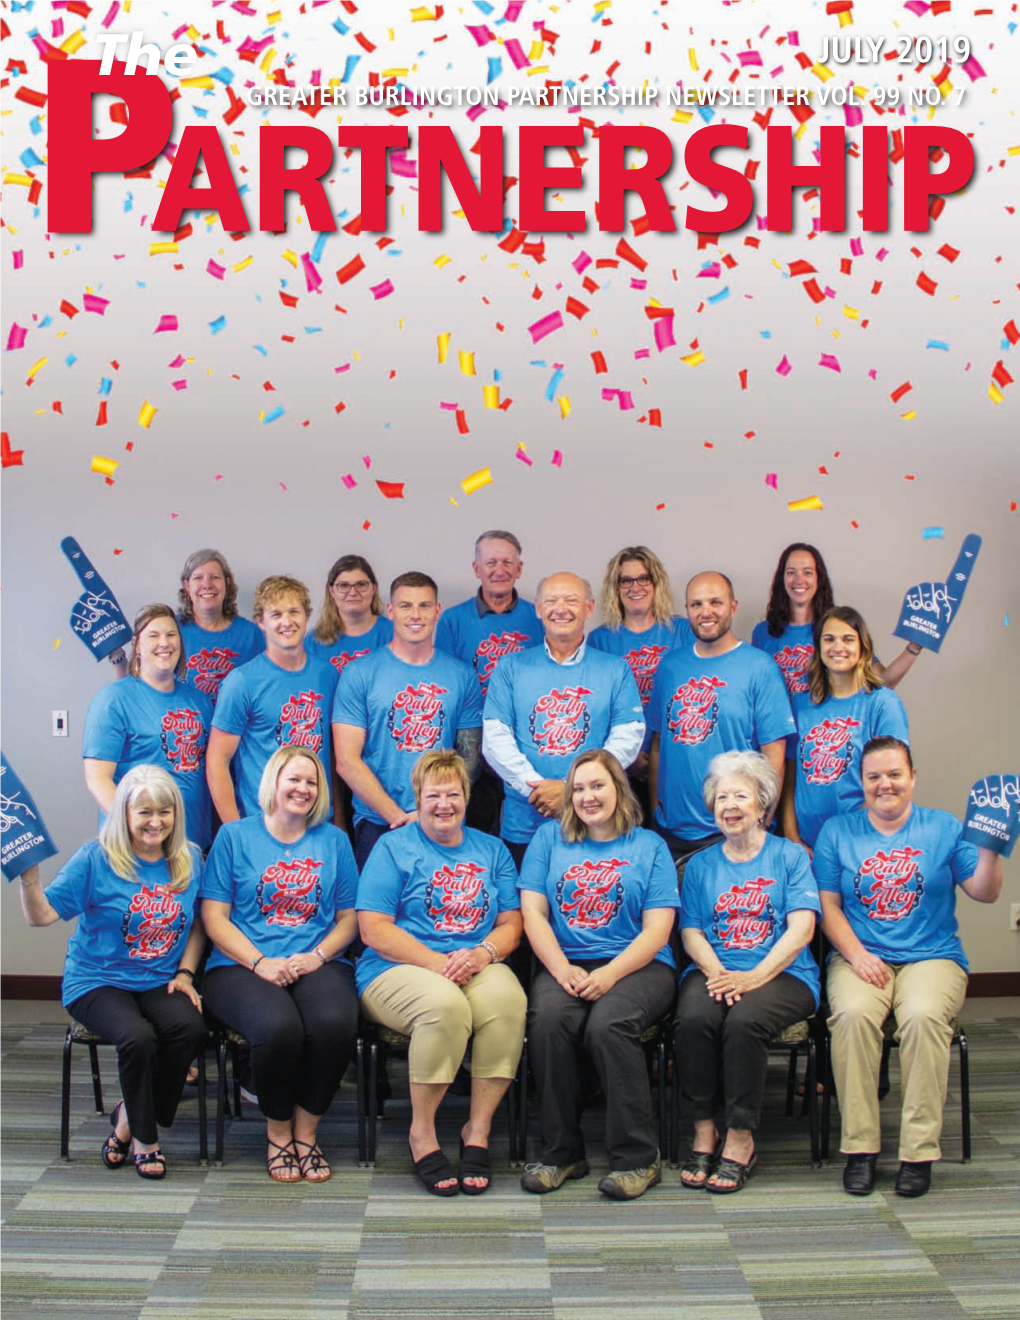 July 2019 Greater Burlington Partnership Newsletter Vol